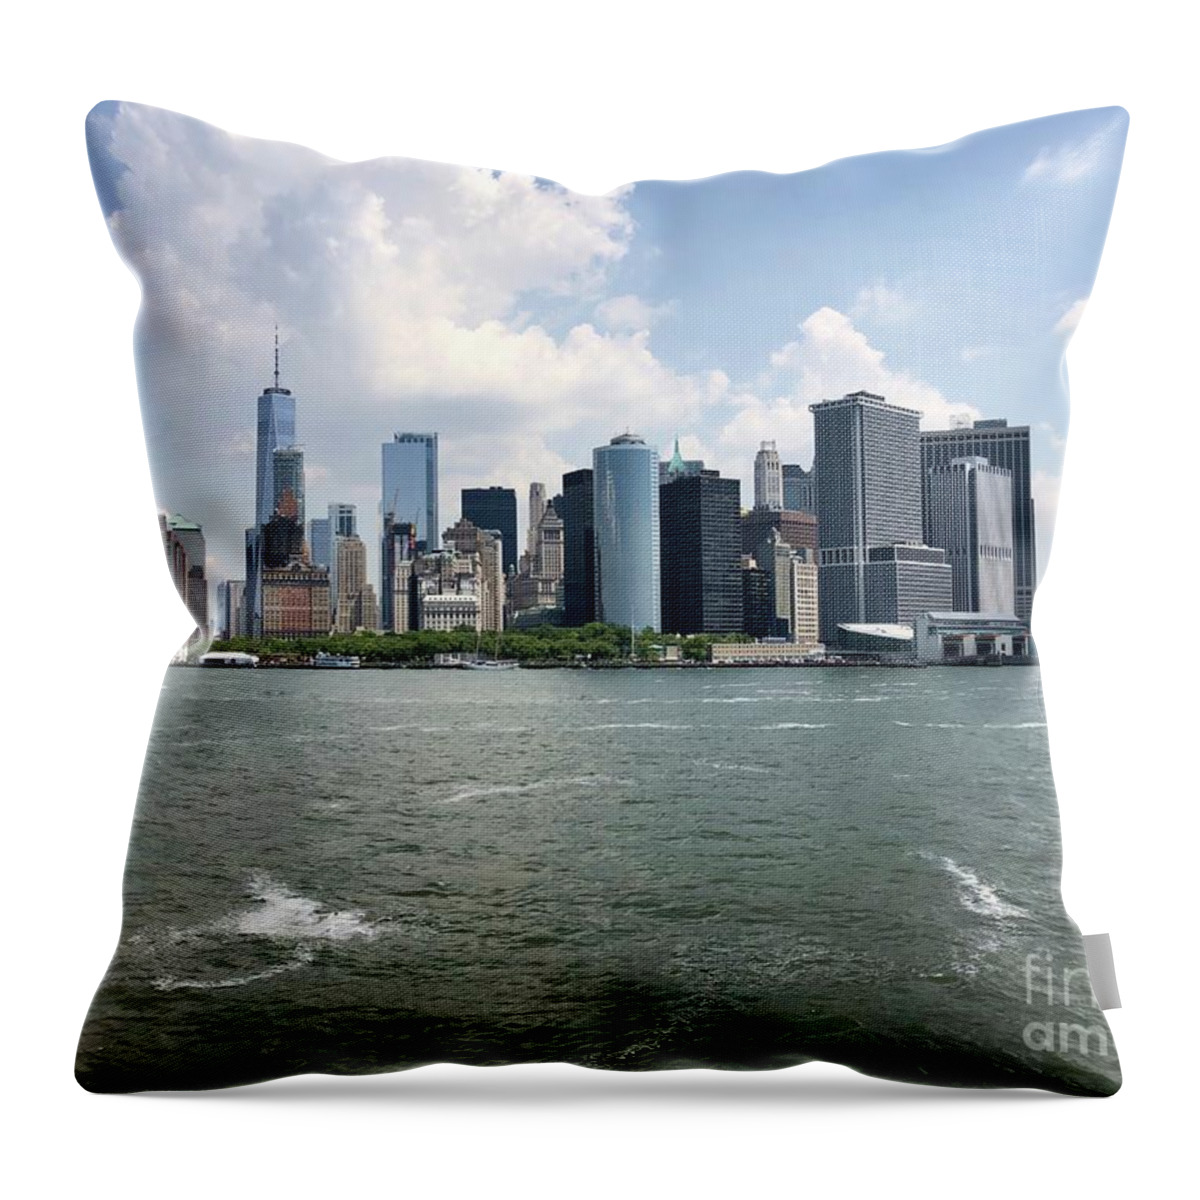 New York Skyline Throw Pillow featuring the photograph New York Skyline #1 by Flavia Westerwelle